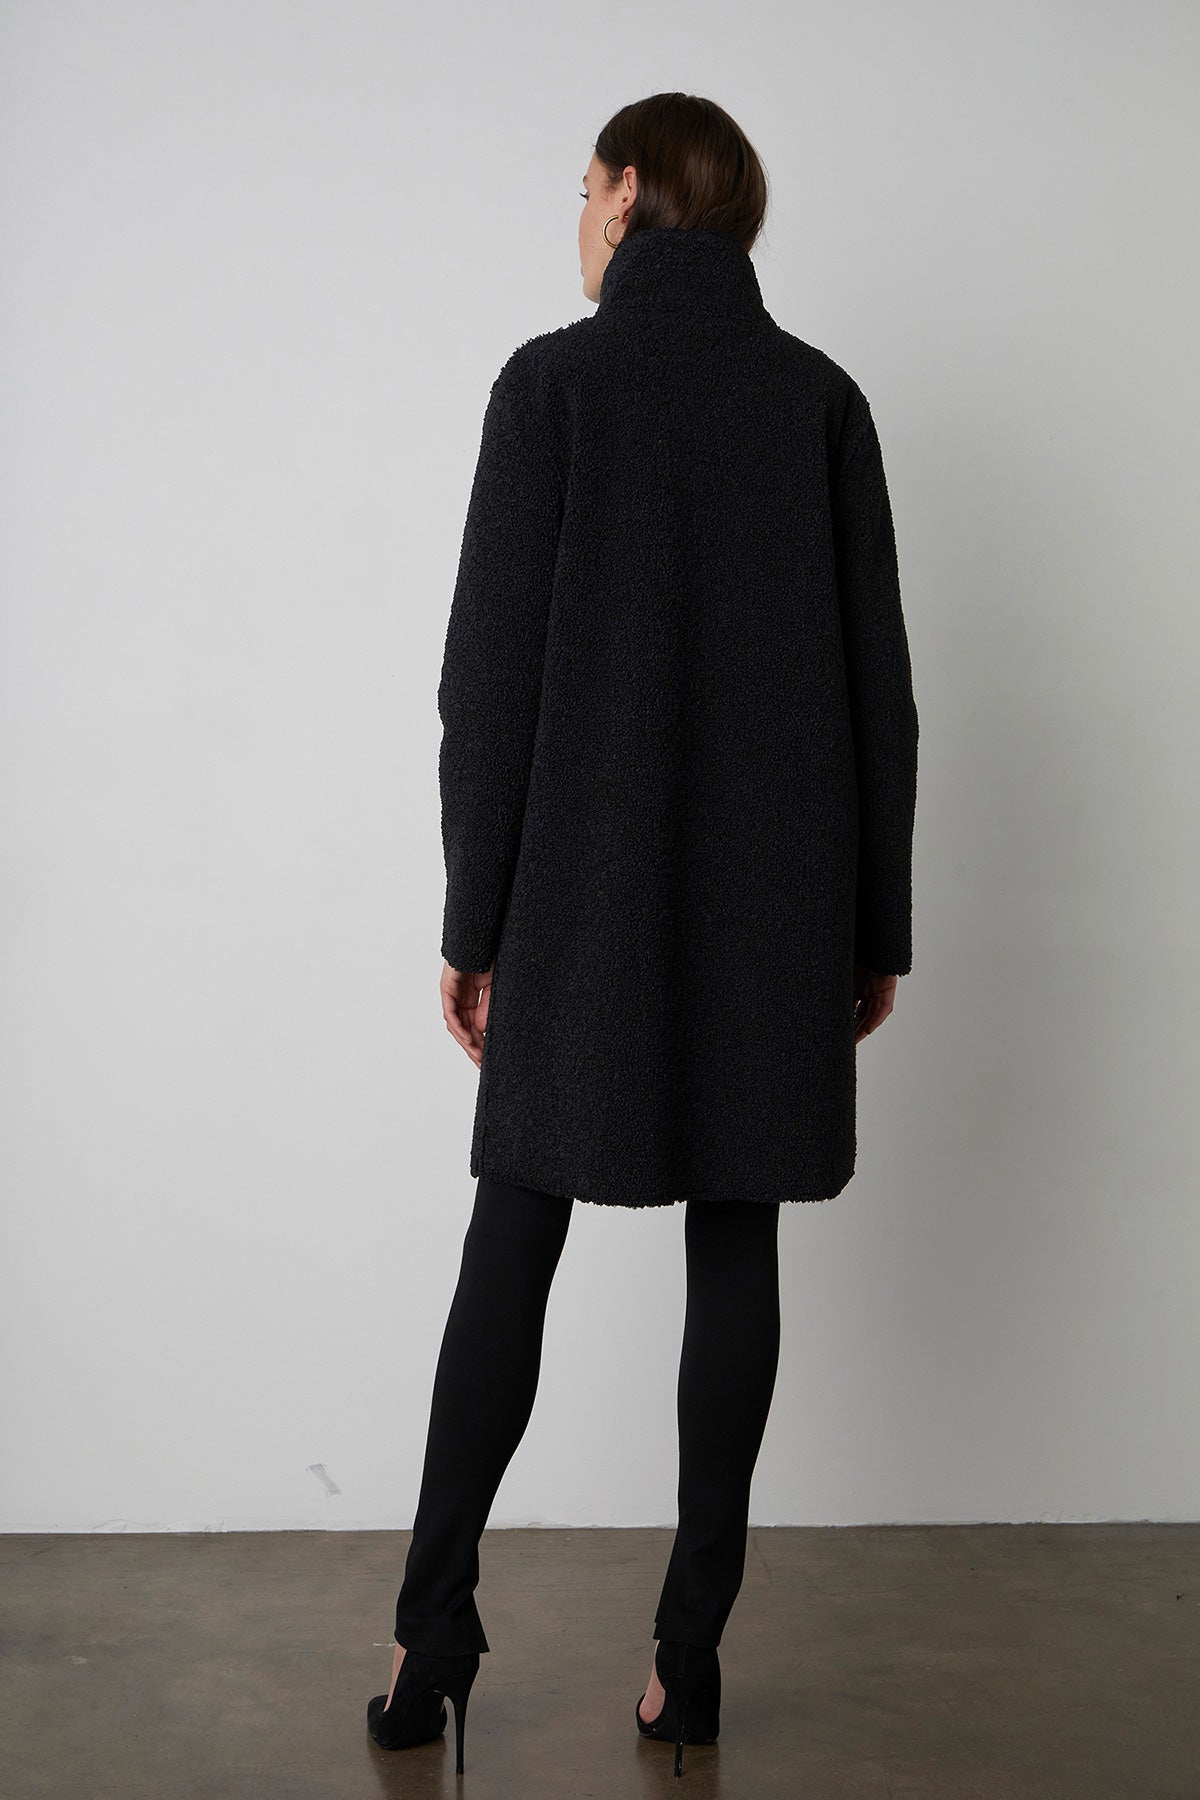 Mirabel Faux Lux Sherpa Reversible Coat in black with black leggings and black heels full length back view-26683697234113